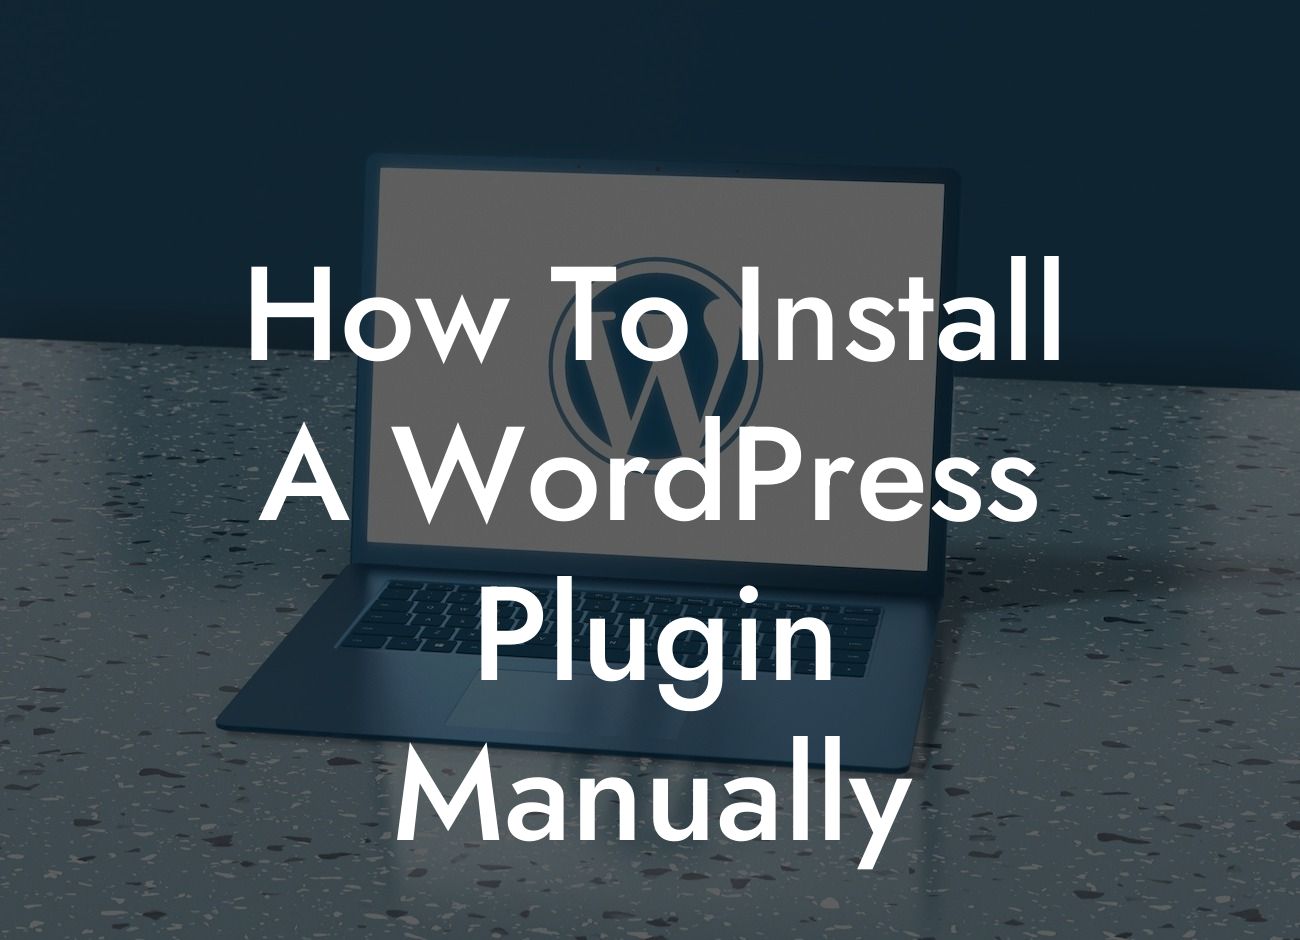 How To Install A WordPress Plugin Manually